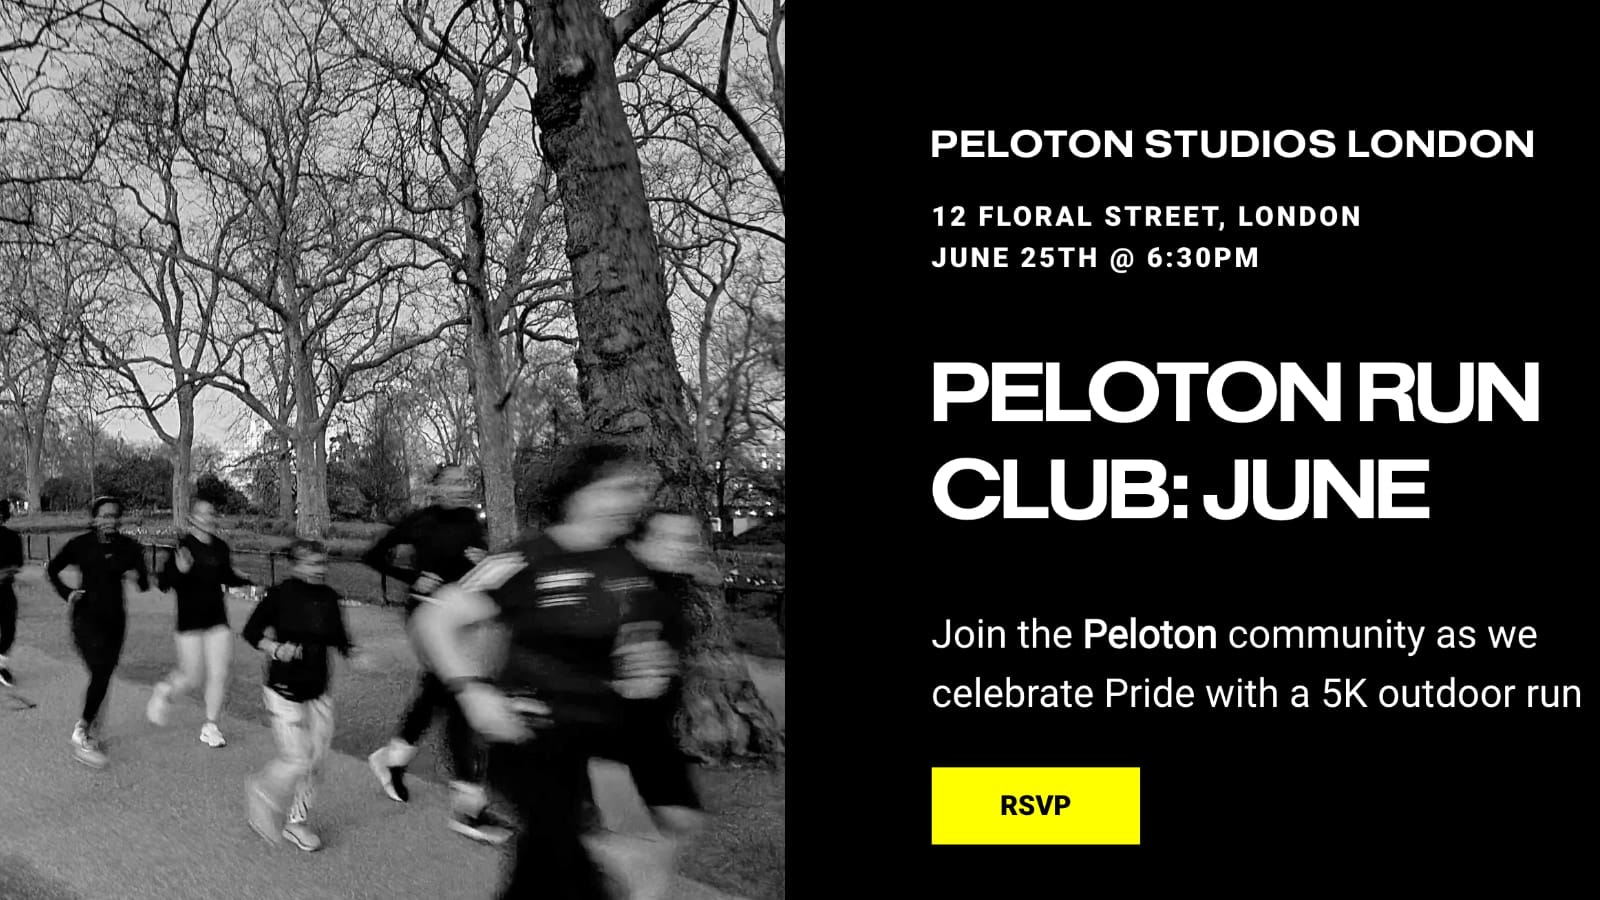 Peloton will host the Outdoor 5K Pride Run (Peloton Run Club) in London on June 25, 2024